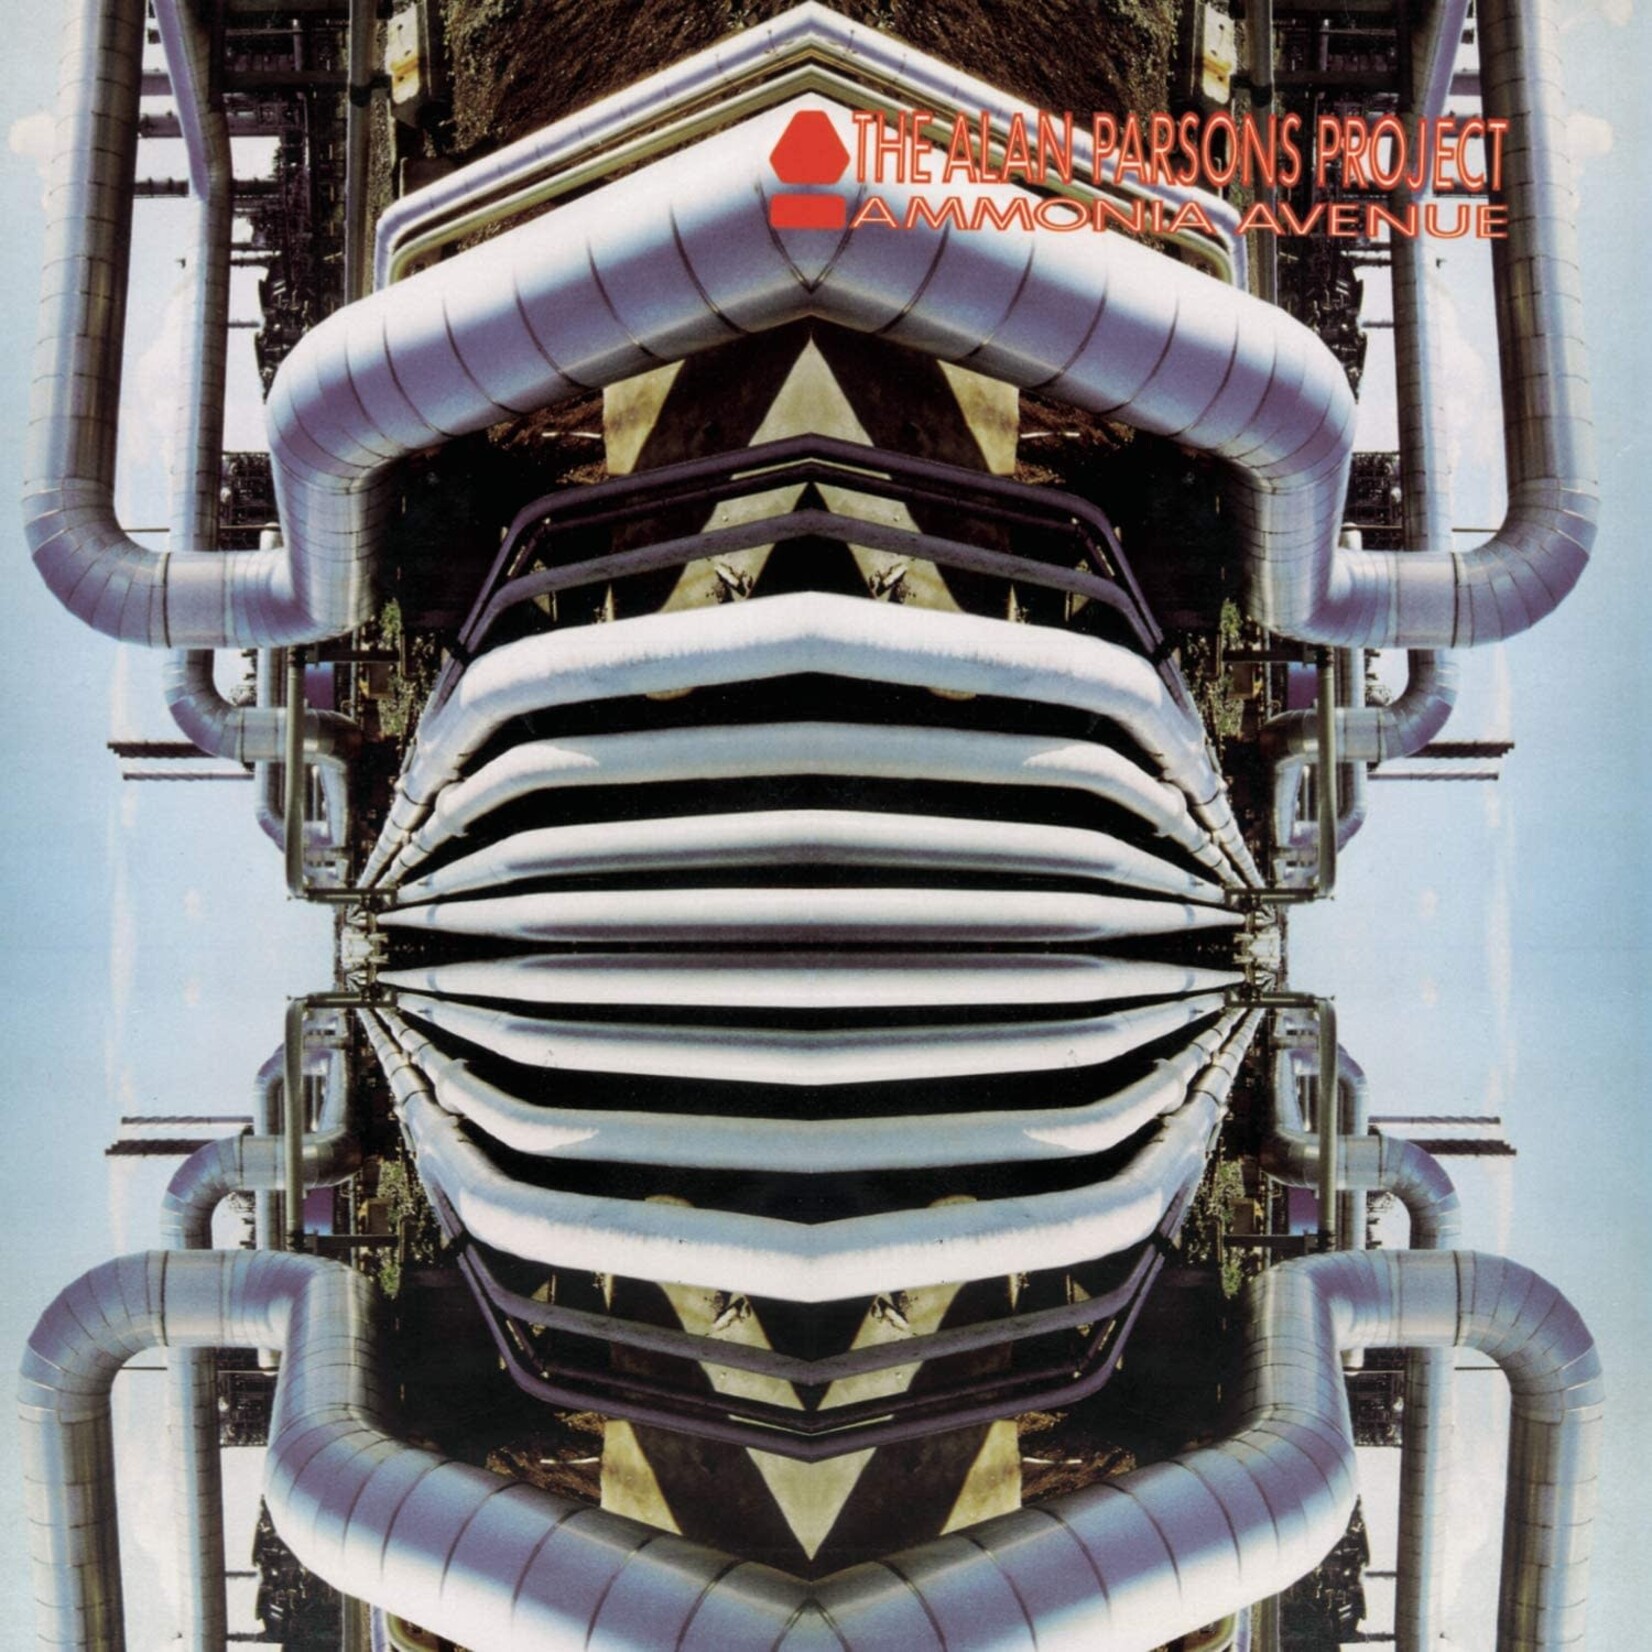 Alan Parsons - Ammonia Avenue [CD]